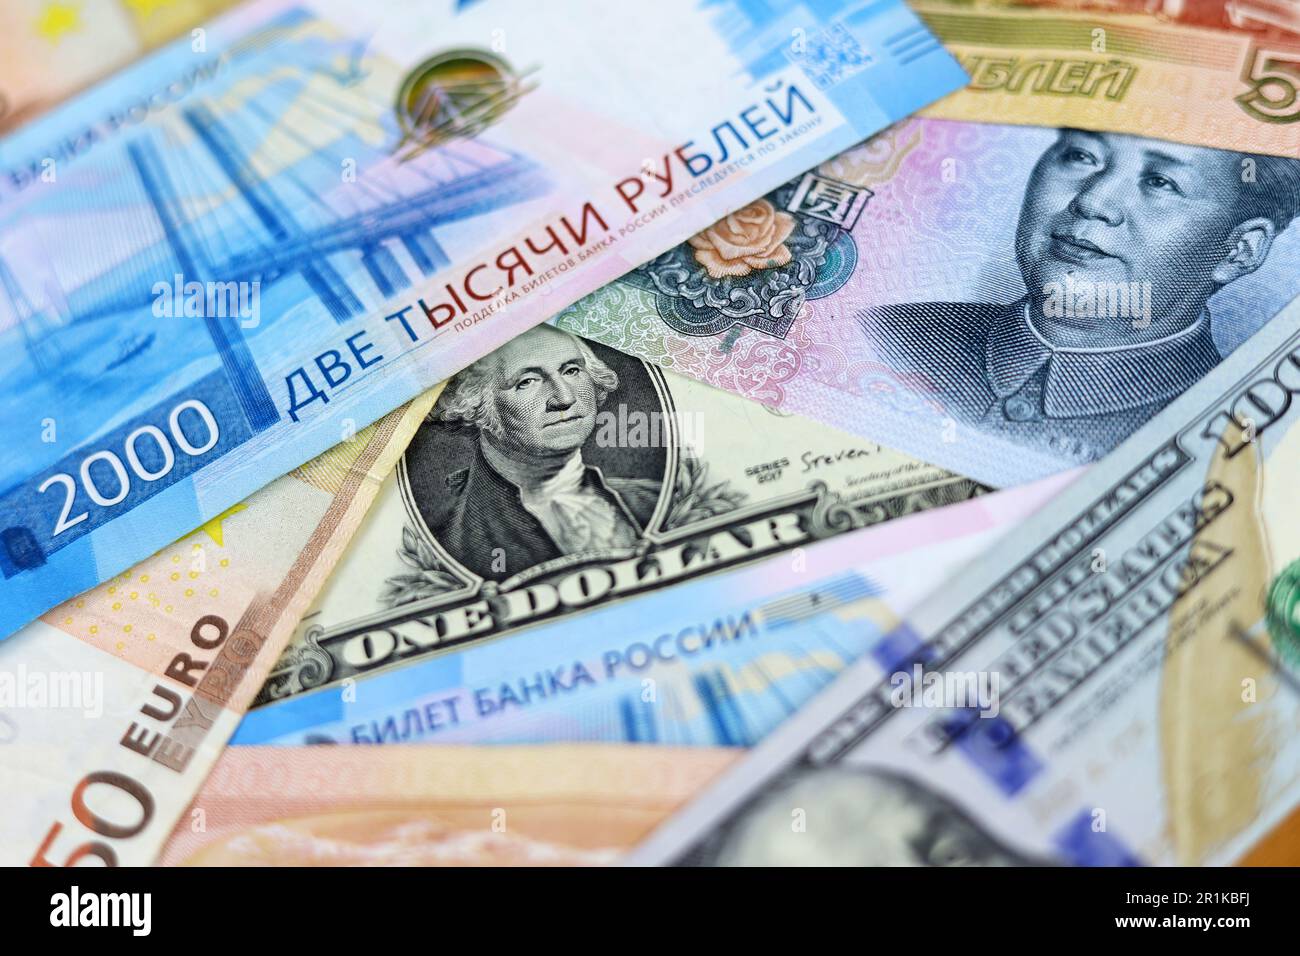 US dollars, Chinese yuan, Euro banknotes and Russian rubles. Concept of trade war between the China and USA Stock Photo